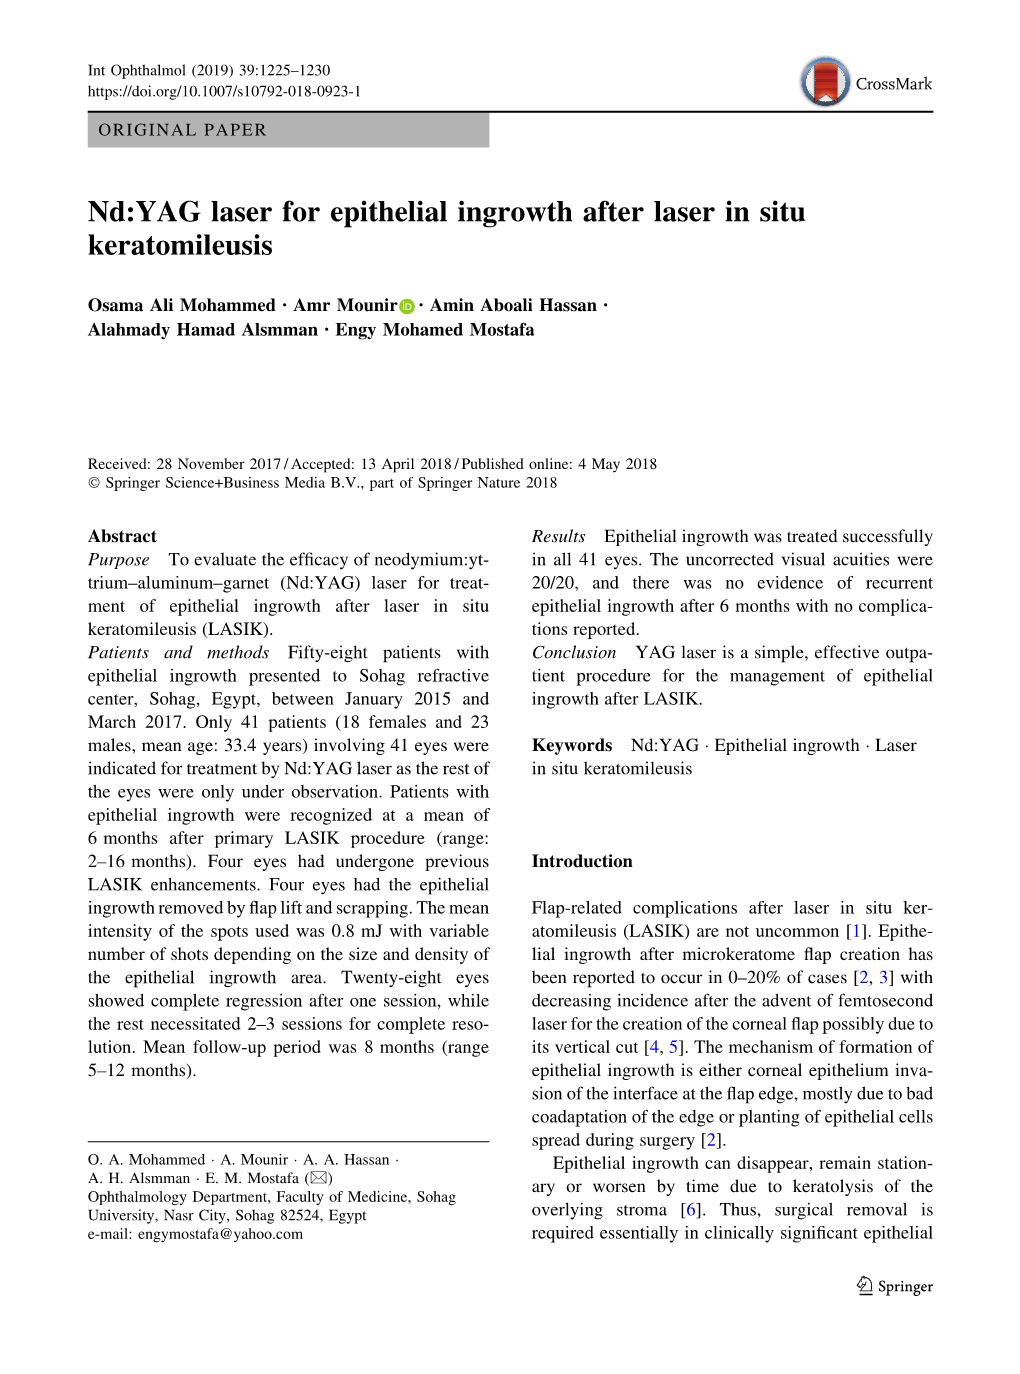 Nd:YAG Laser for Epithelial Ingrowth After Laser in Situ Keratomileusis